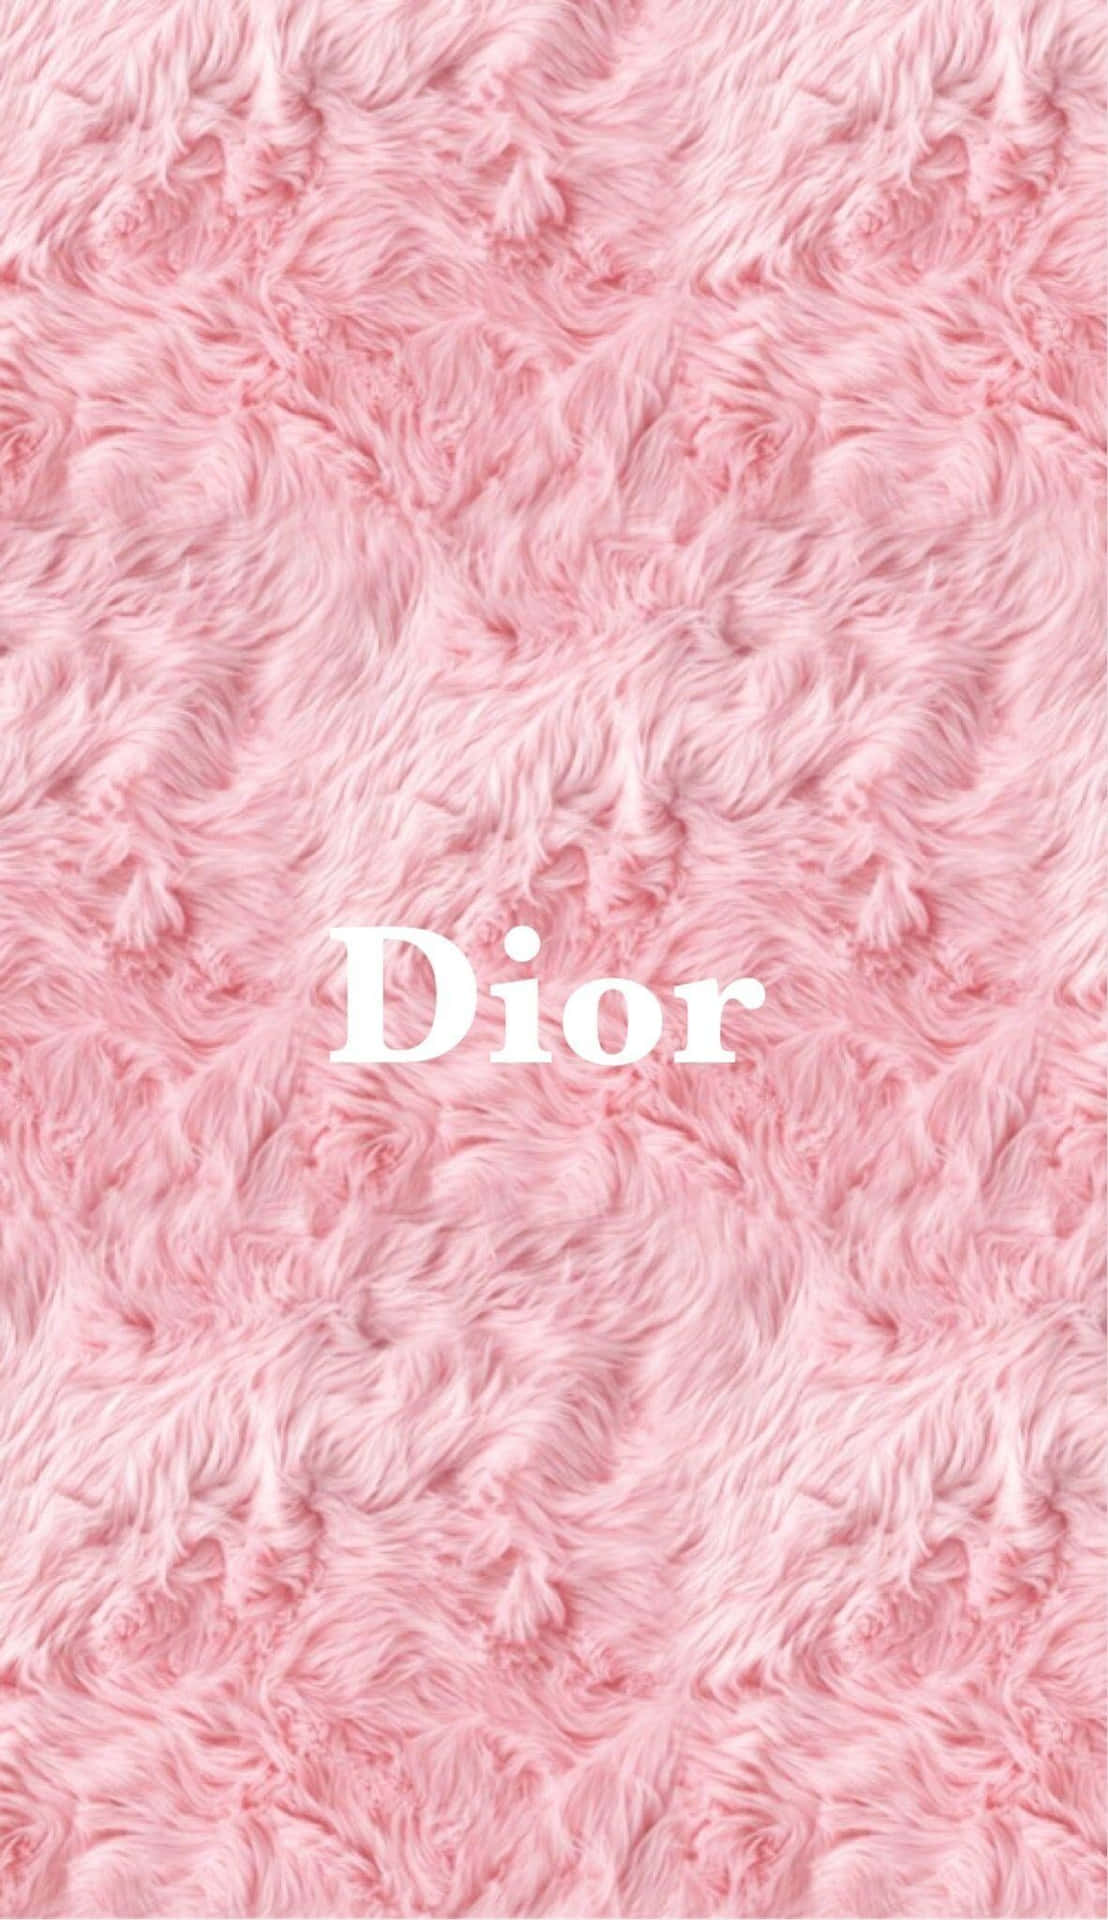 Pink Fur Texture Dior Branding Wallpaper